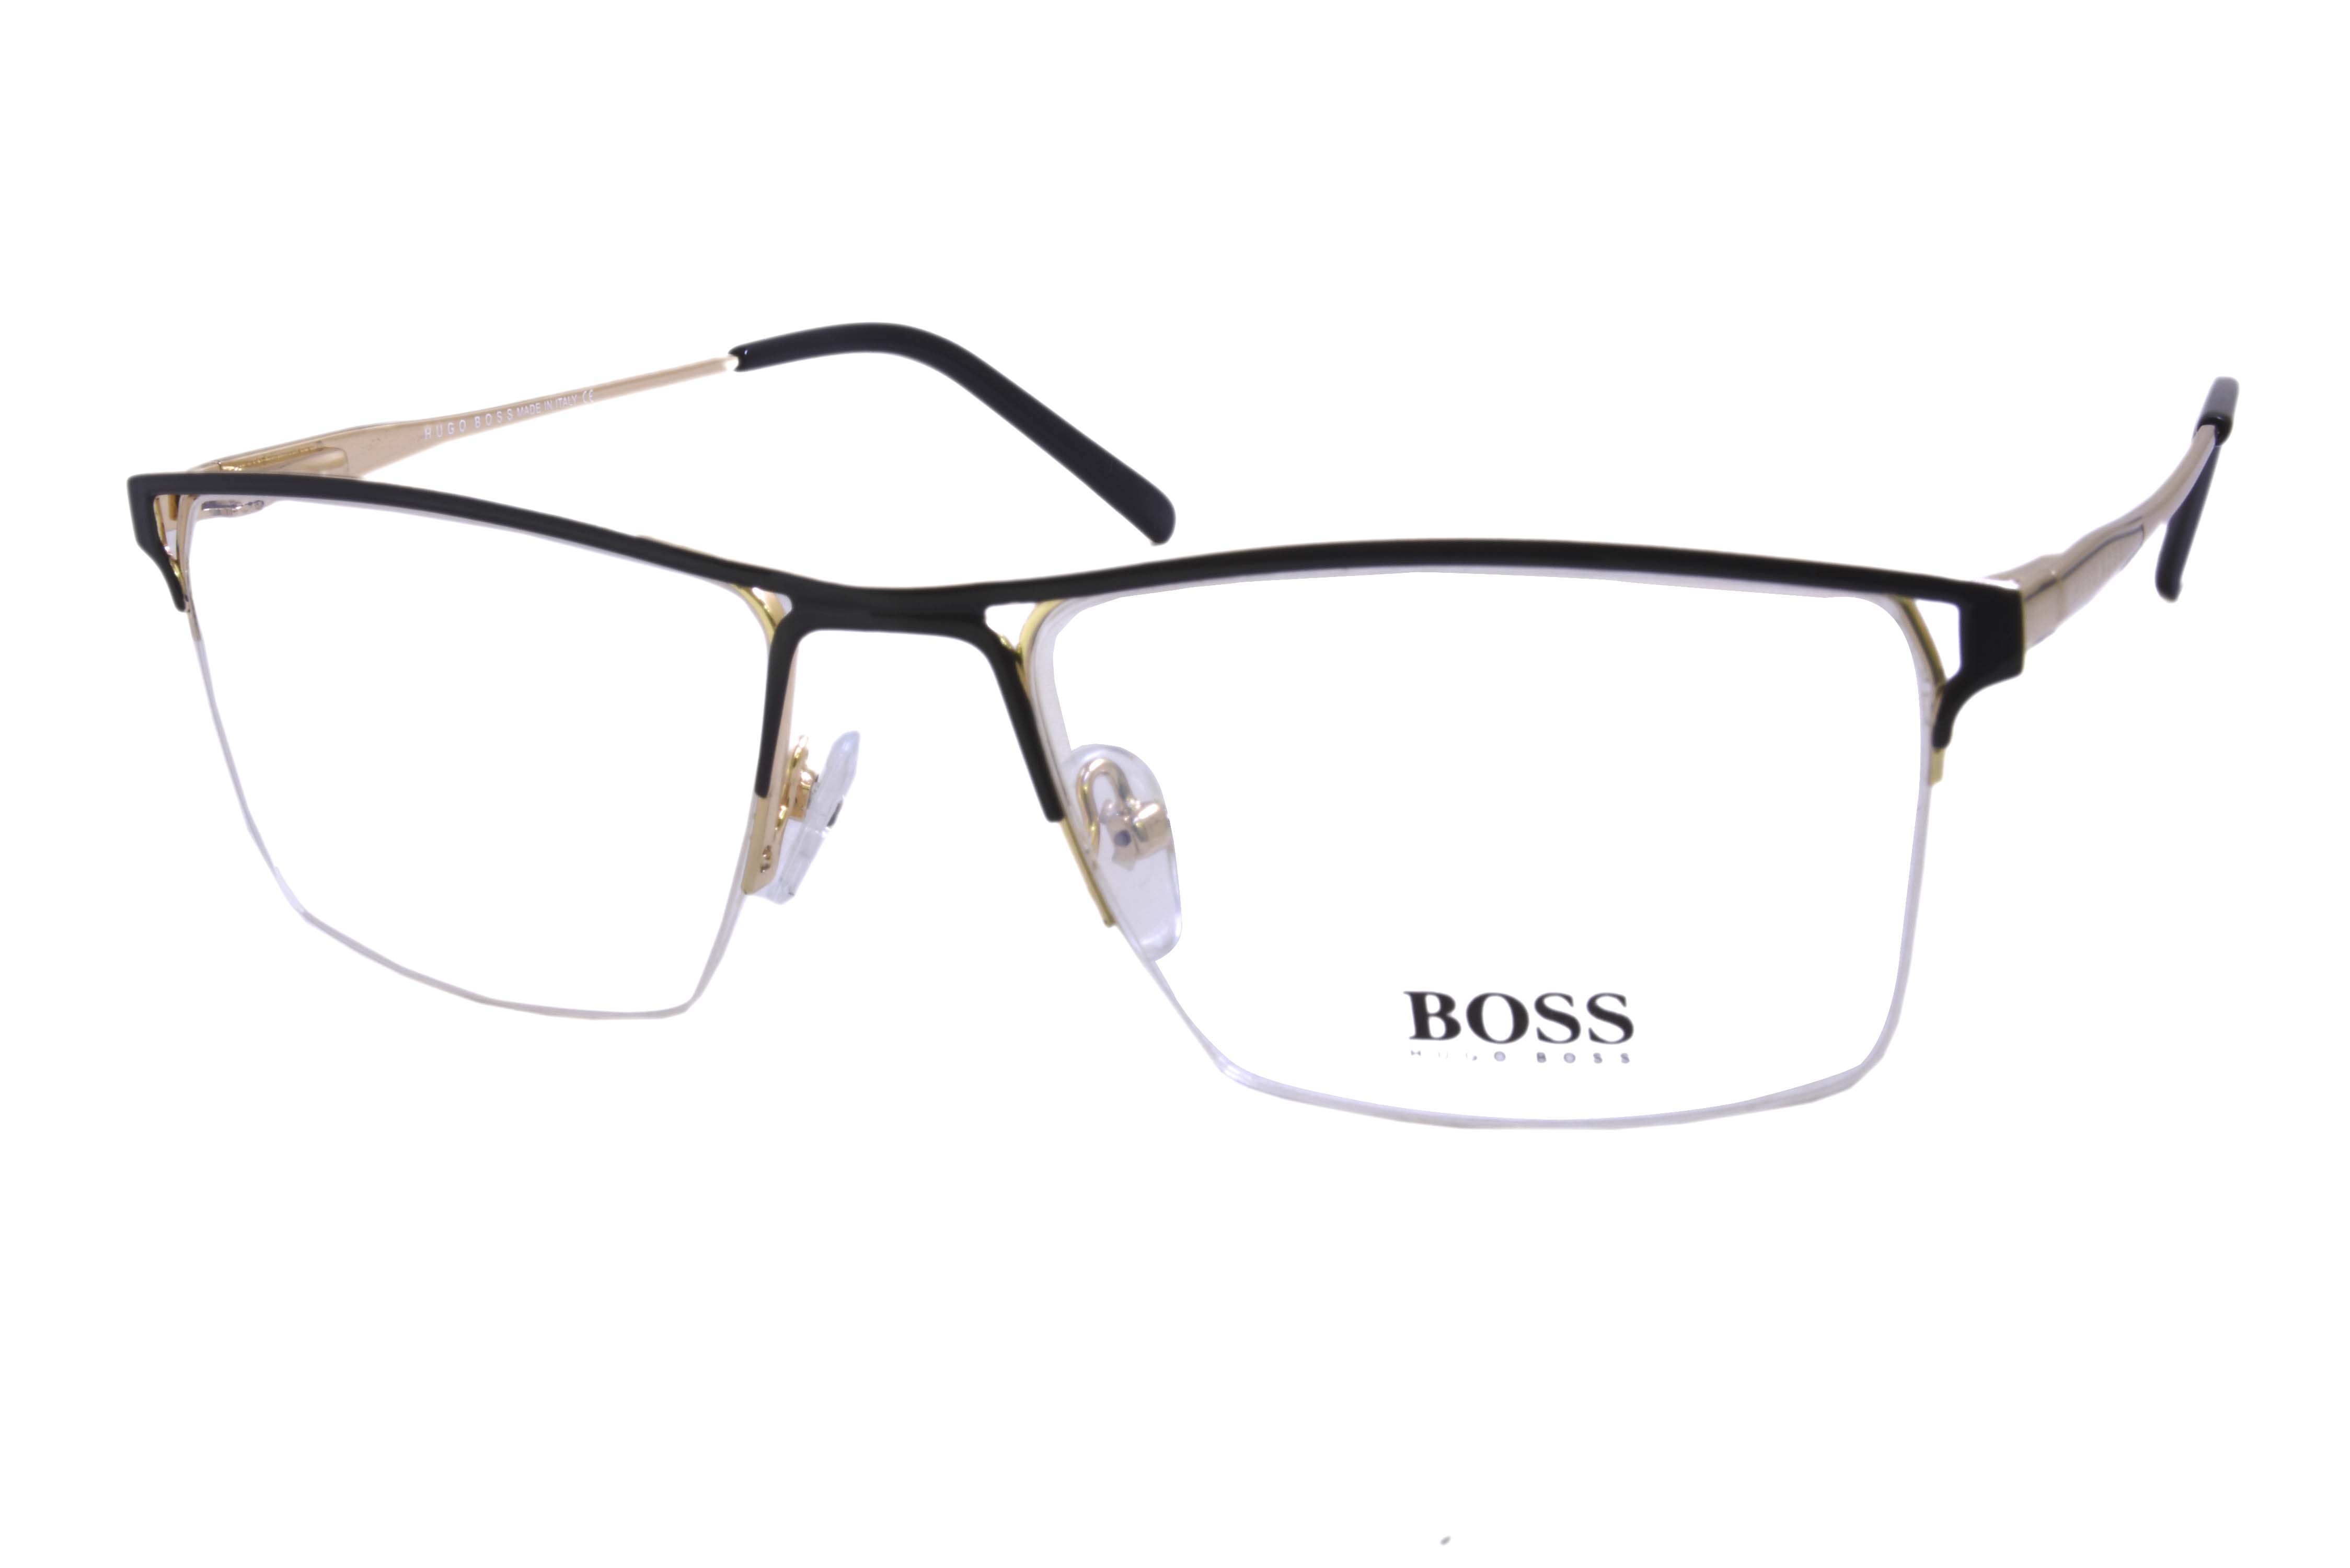 Hugo Boss Glasses Price in Pakistan | Huugo Boss Glasses Online | Ainak.pk